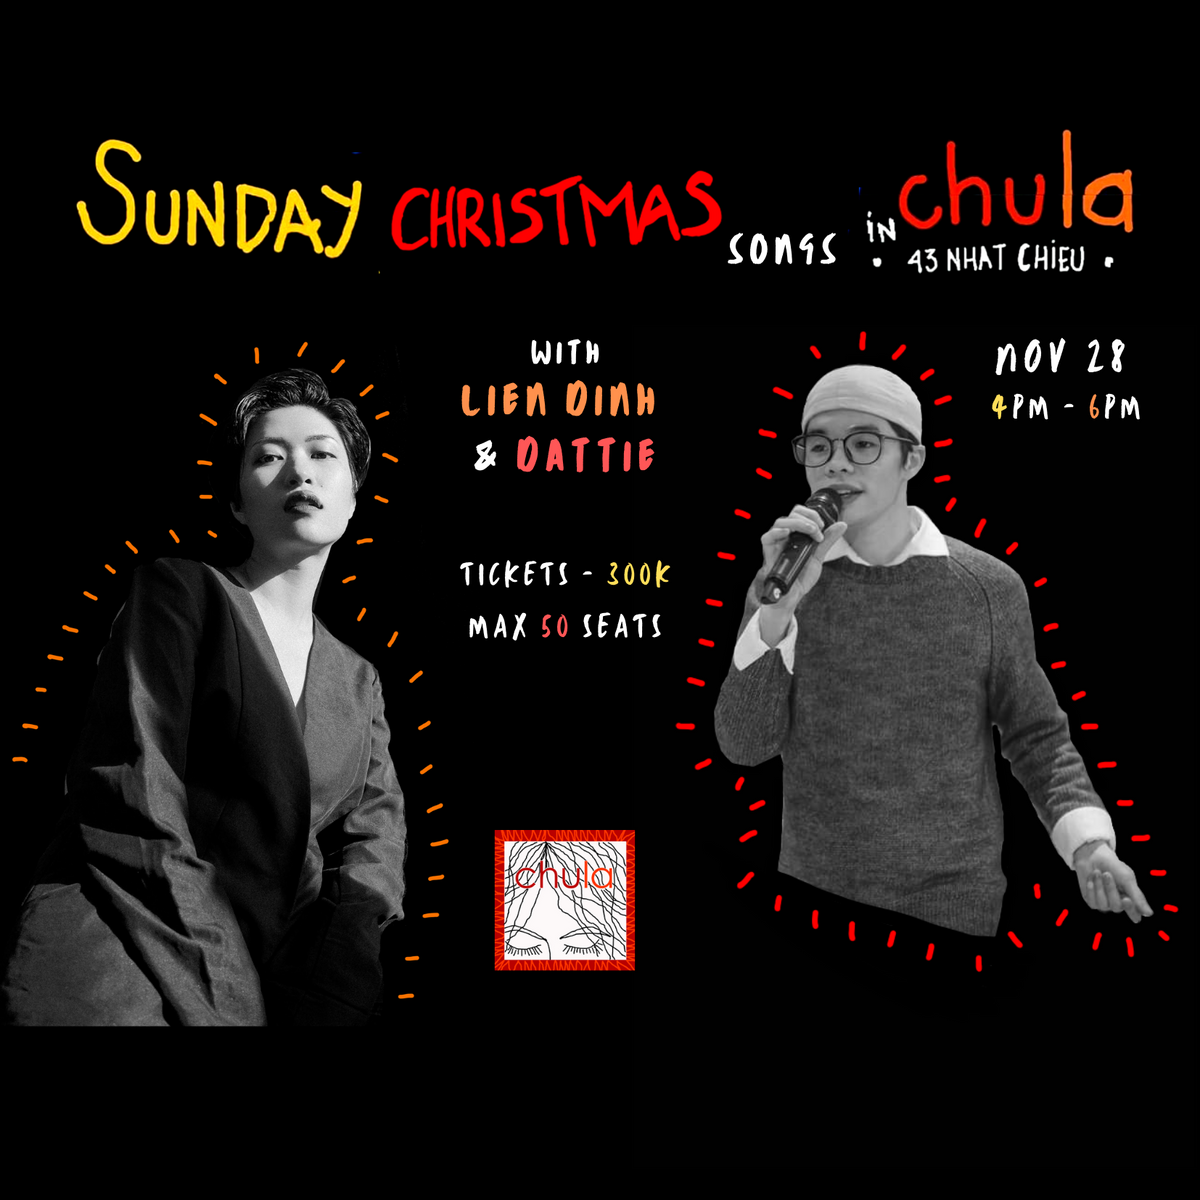 Nov 28 - Christmas songs in Chula!